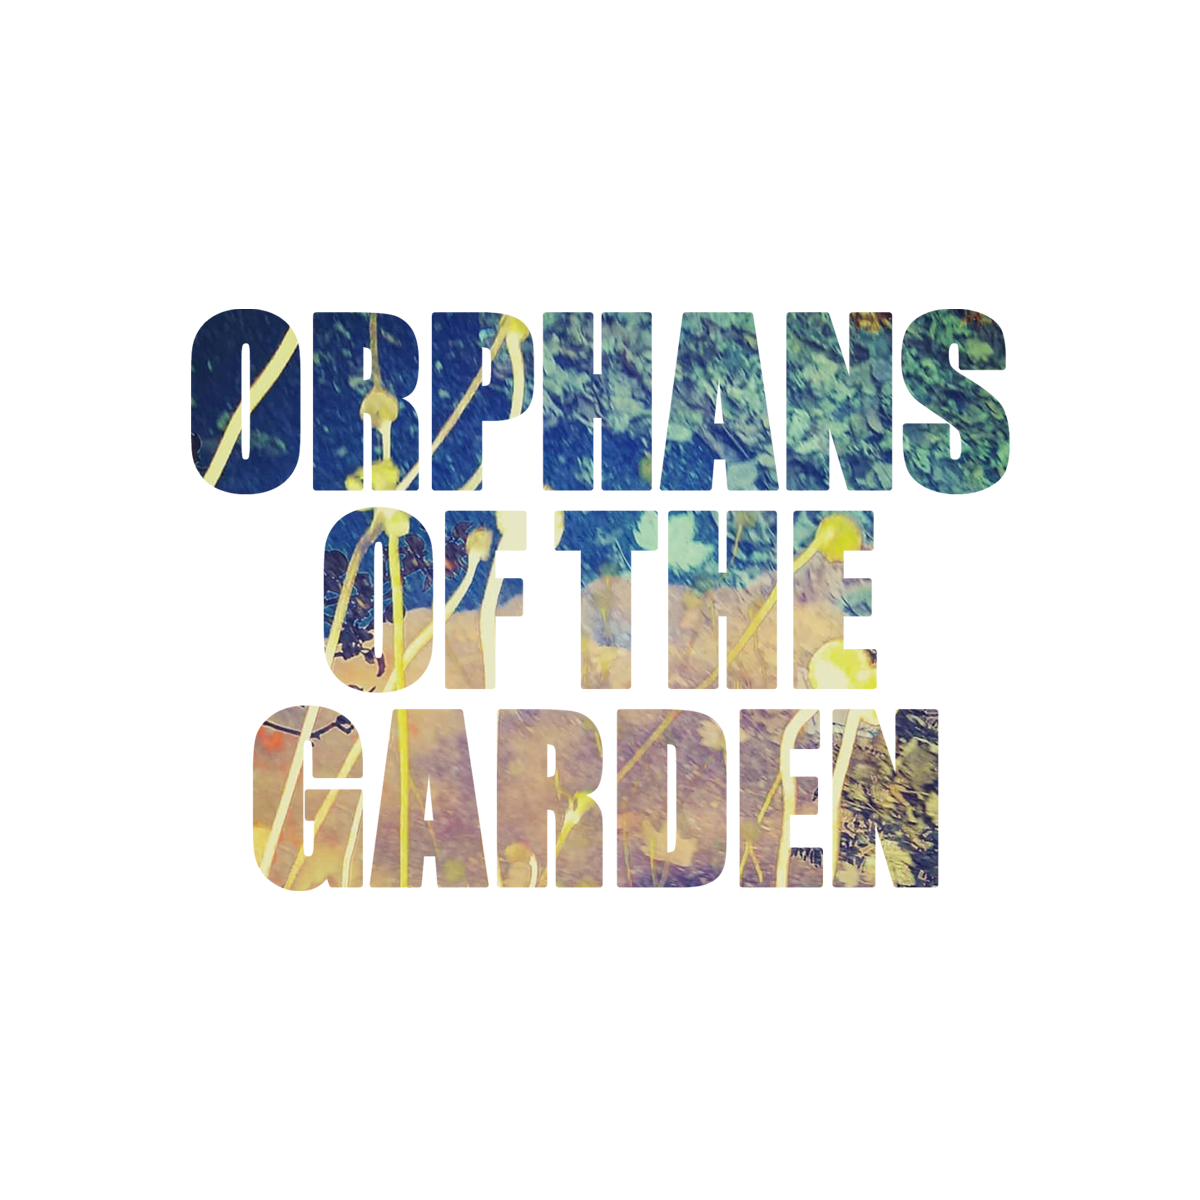 Orphans of the garden - Phaedra Hardstaff